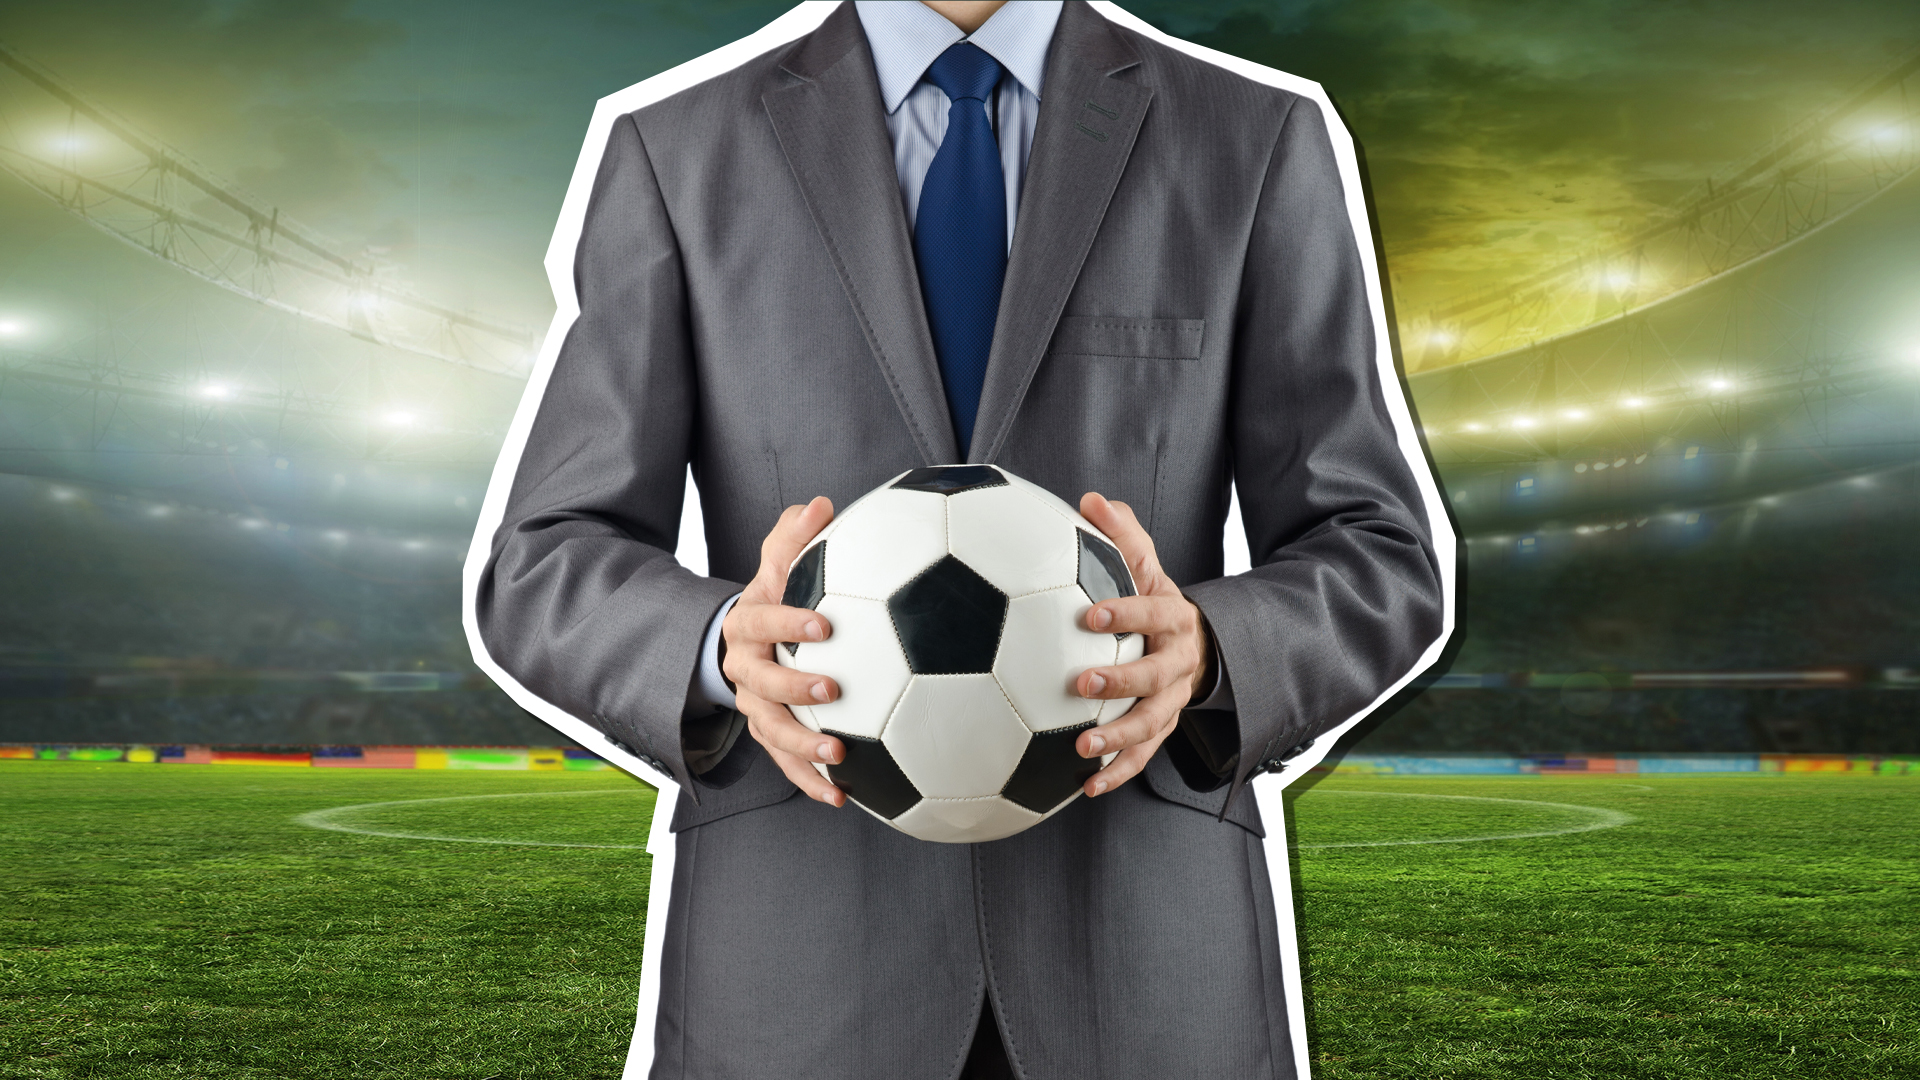 A football manager holding a match ball